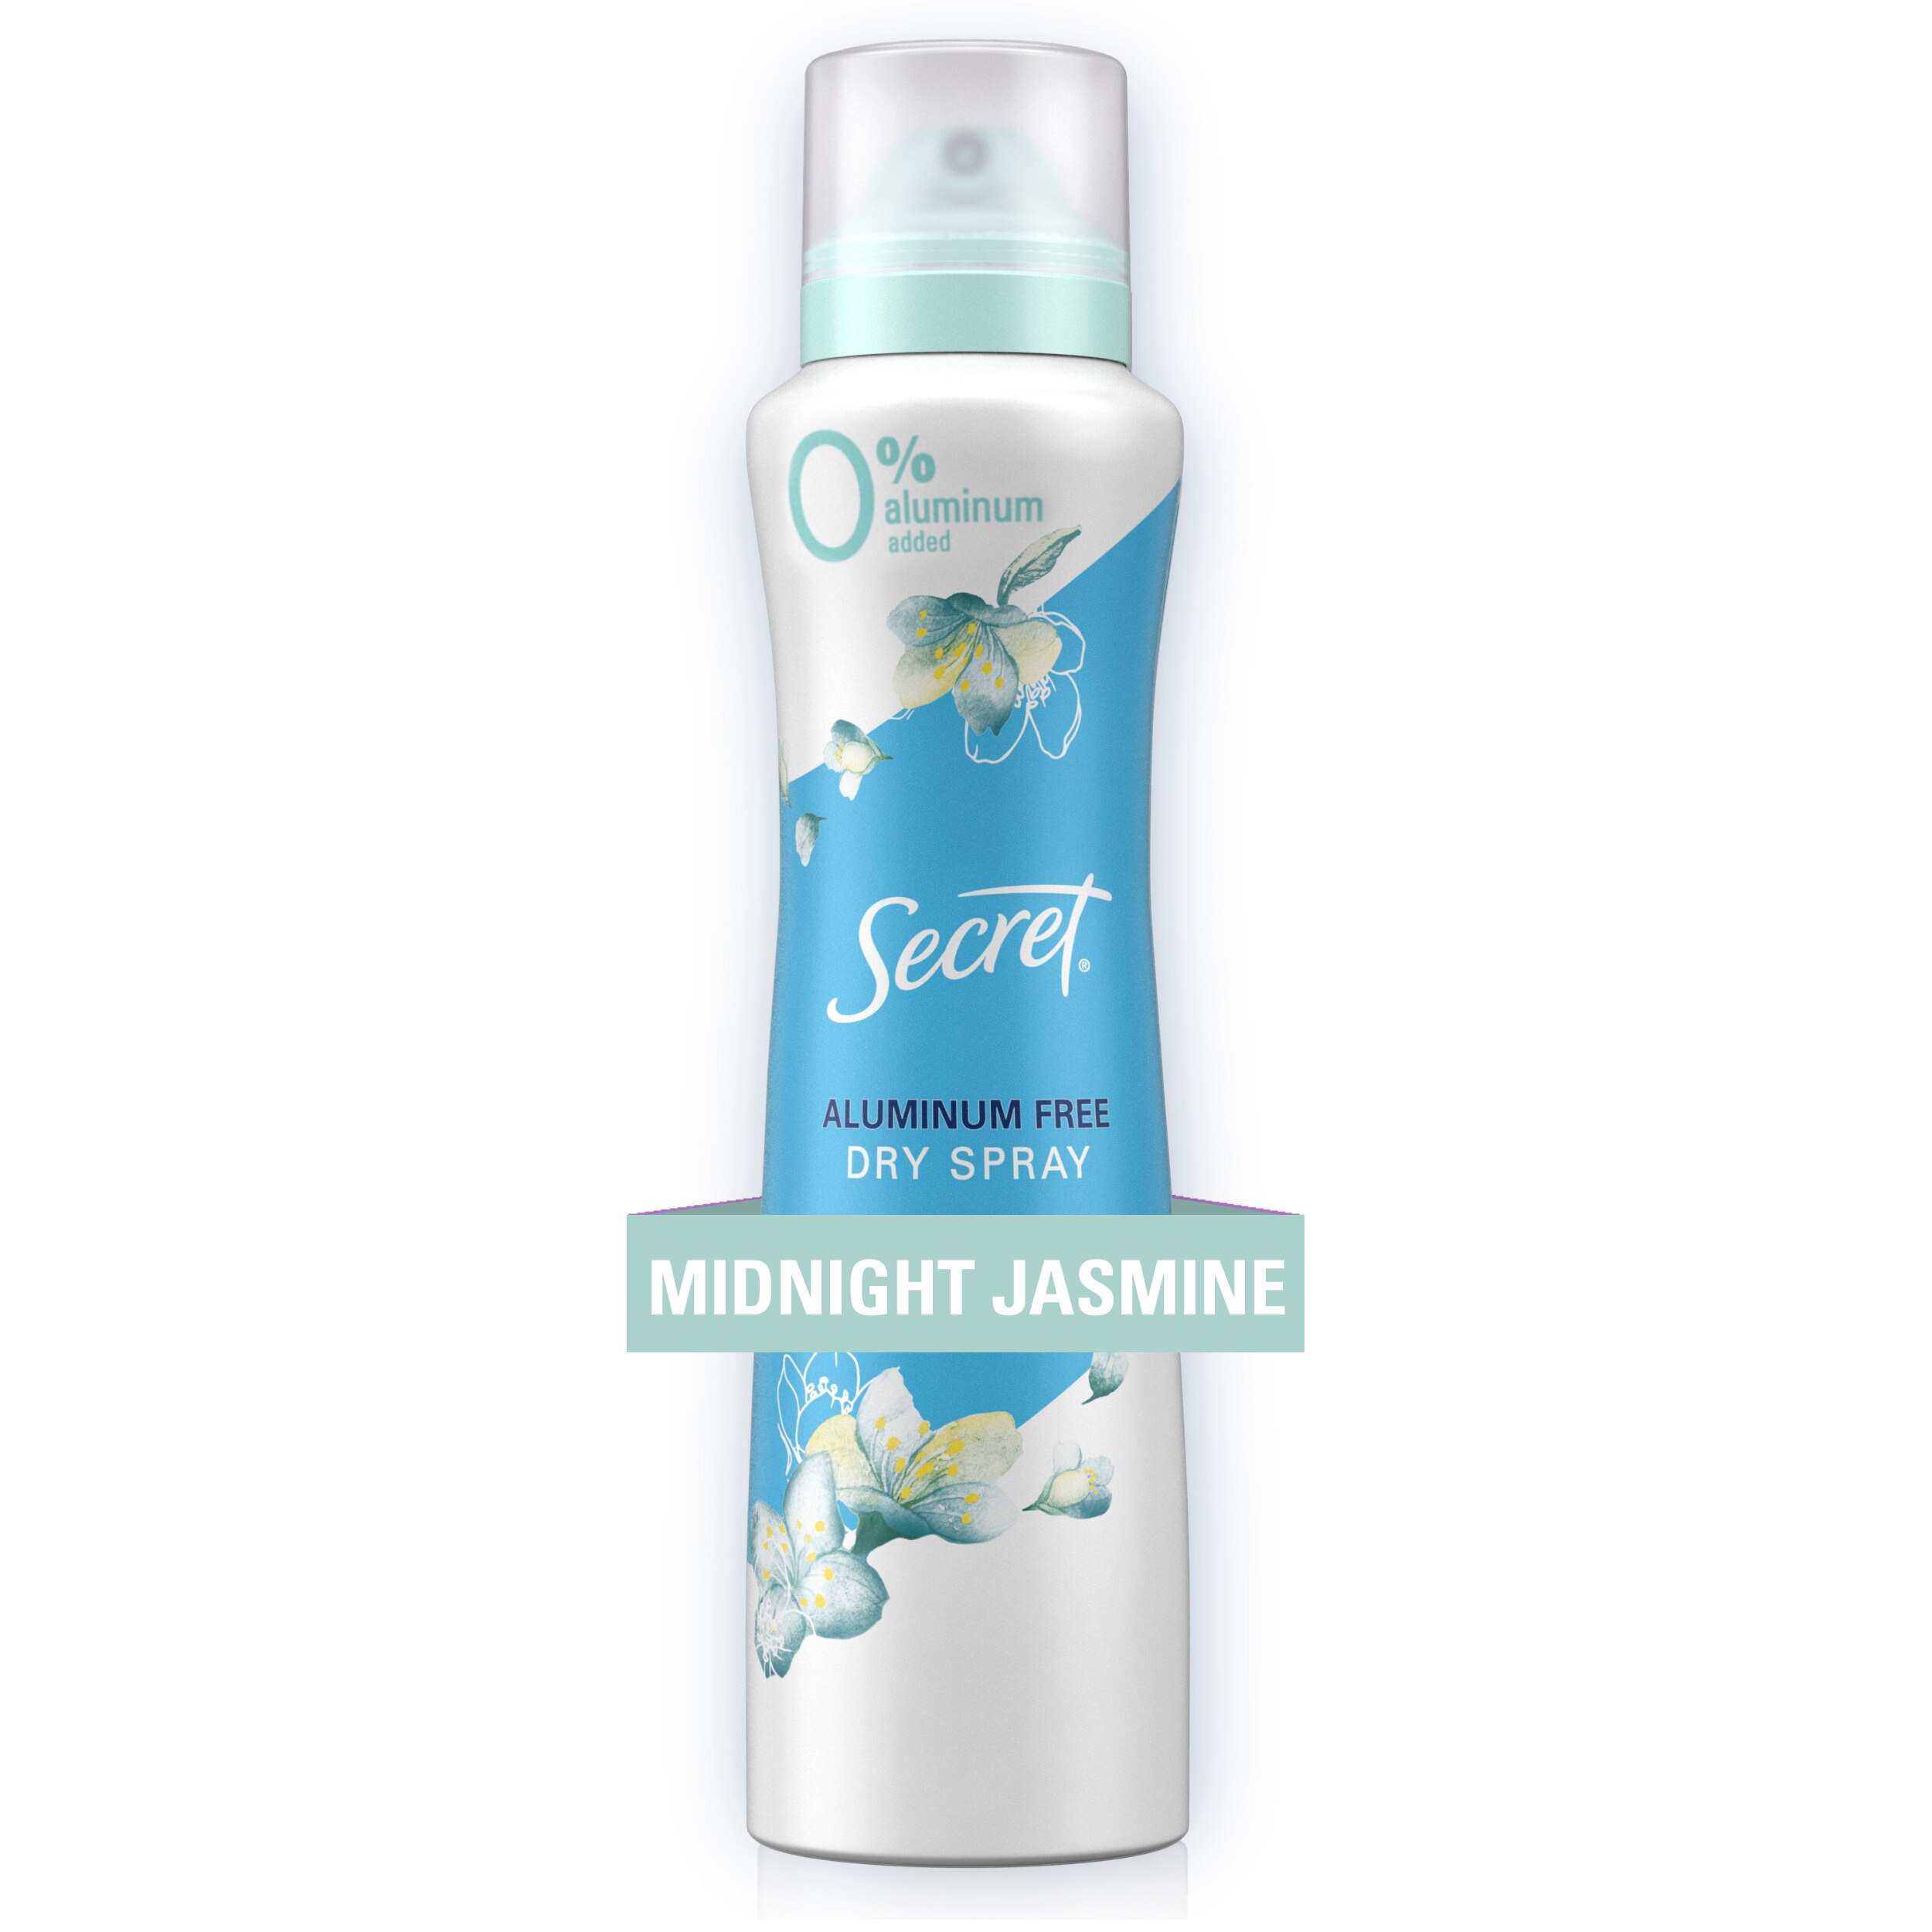 Secret Dry Spray Aluminum Free Deodorant for Women, Midnight Jasmine, 4.1oz